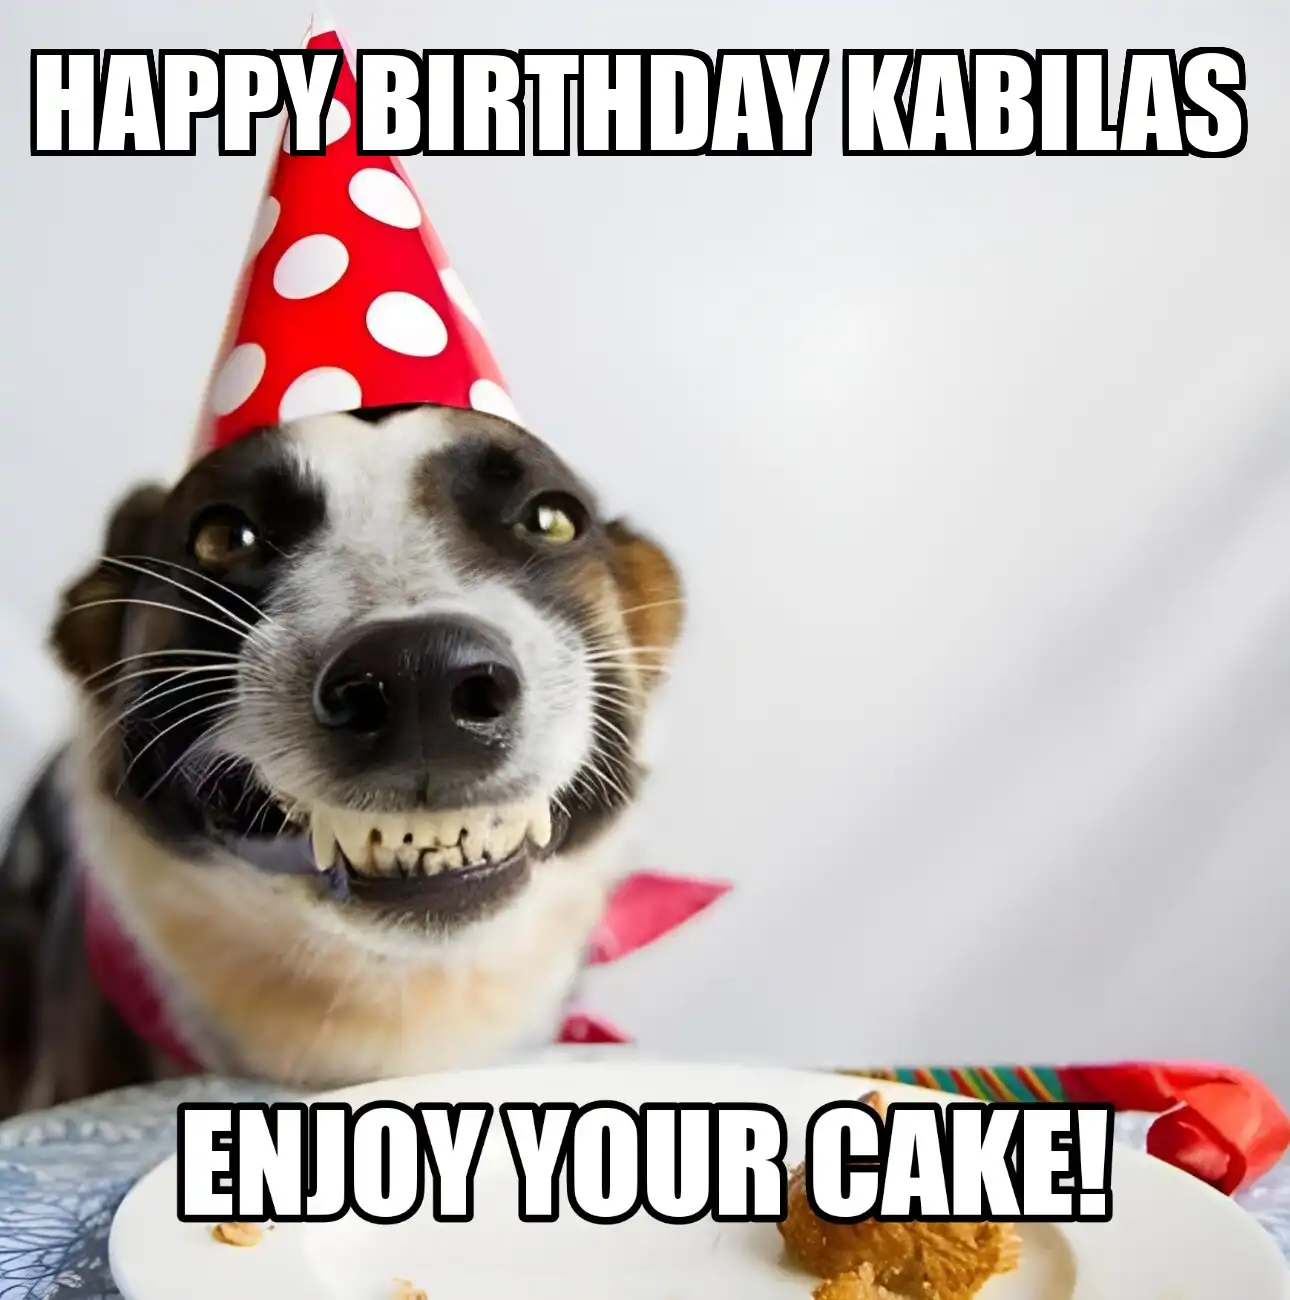 Happy Birthday Kabilas Enjoy Your Cake Dog Meme